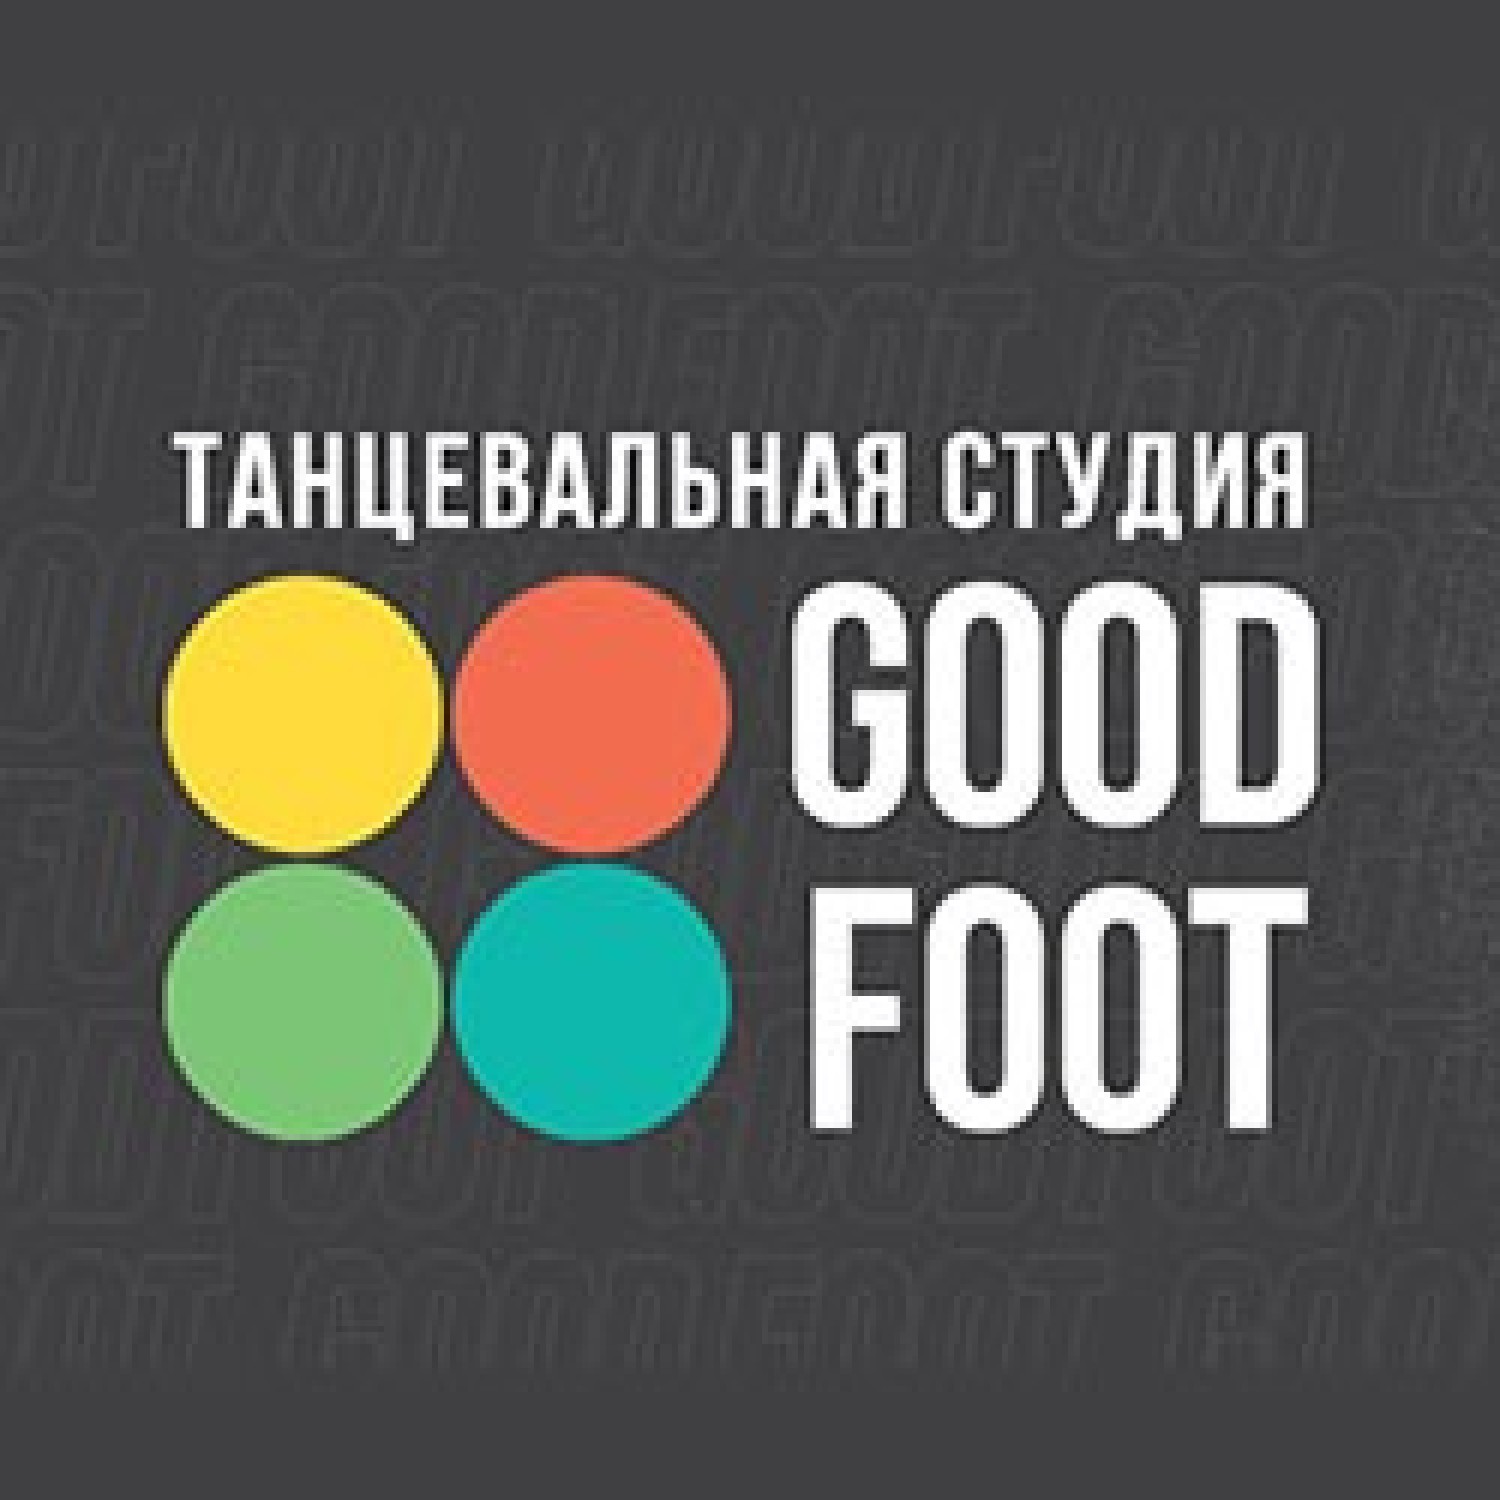 Студия "Good Foot"